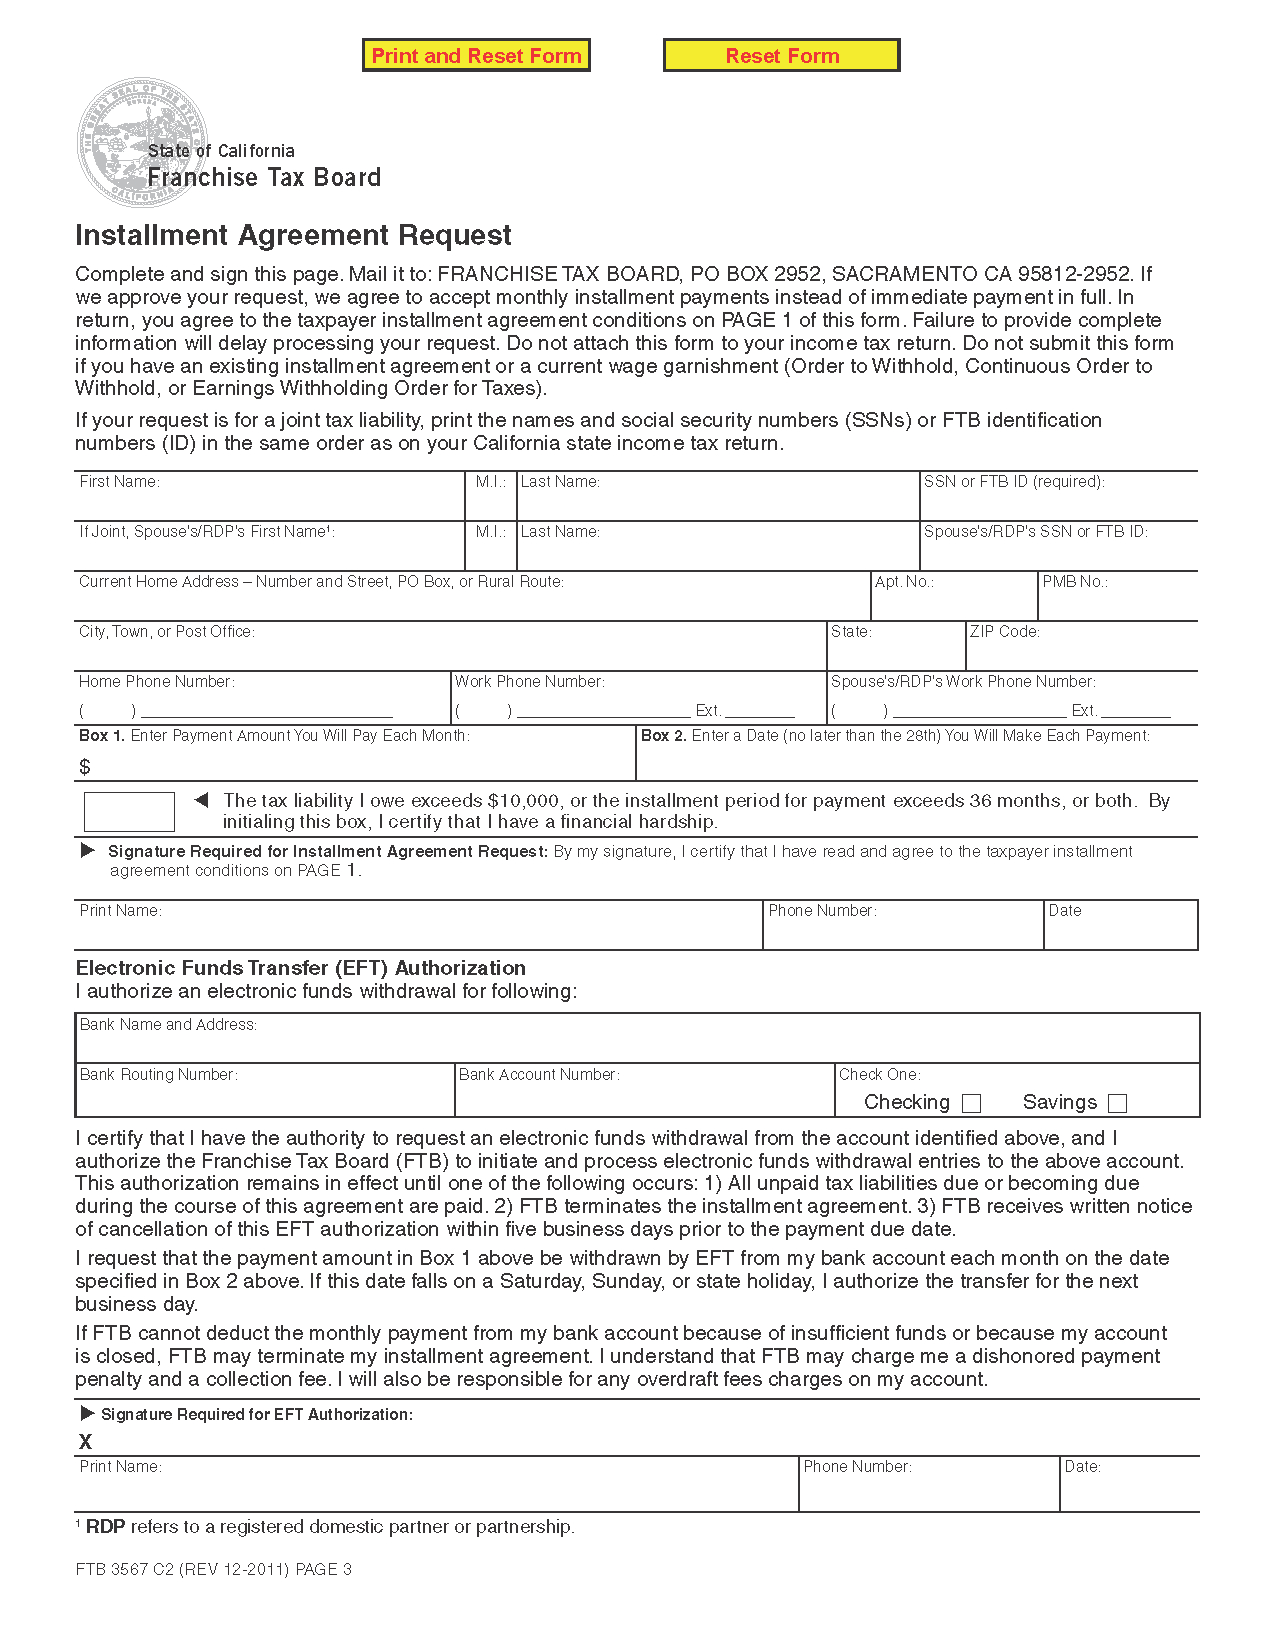 Ftb Ca Gov Installment Agreement Form 3567 Installment Agreement Request